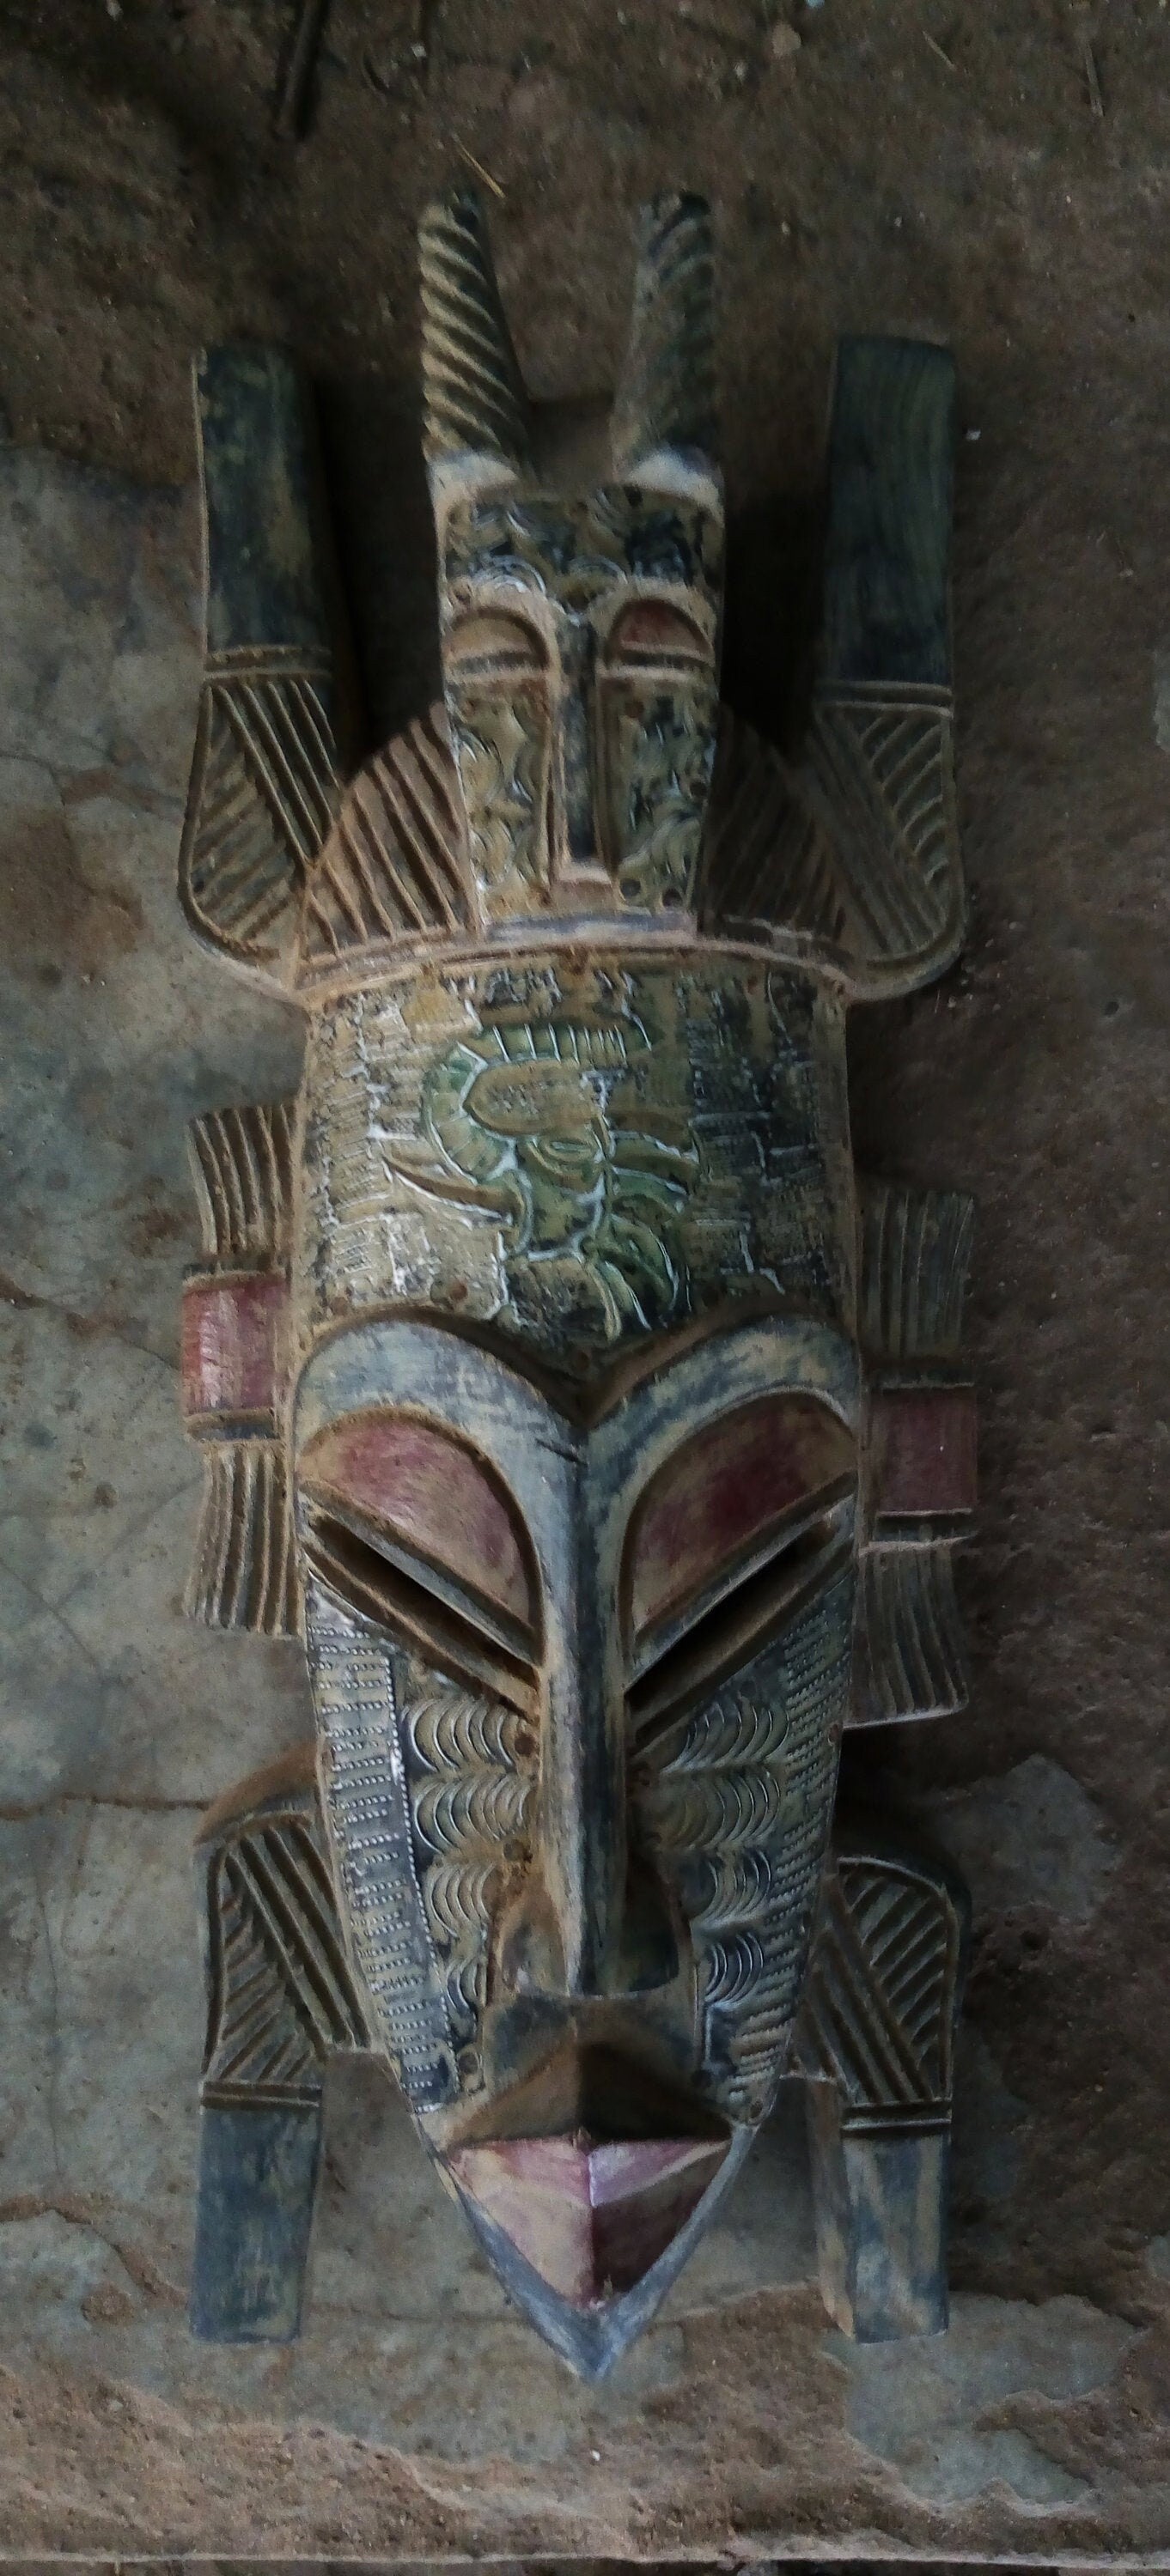 African mask, African art, African wall mask, wooden tribal mask, African art, Mask for wall